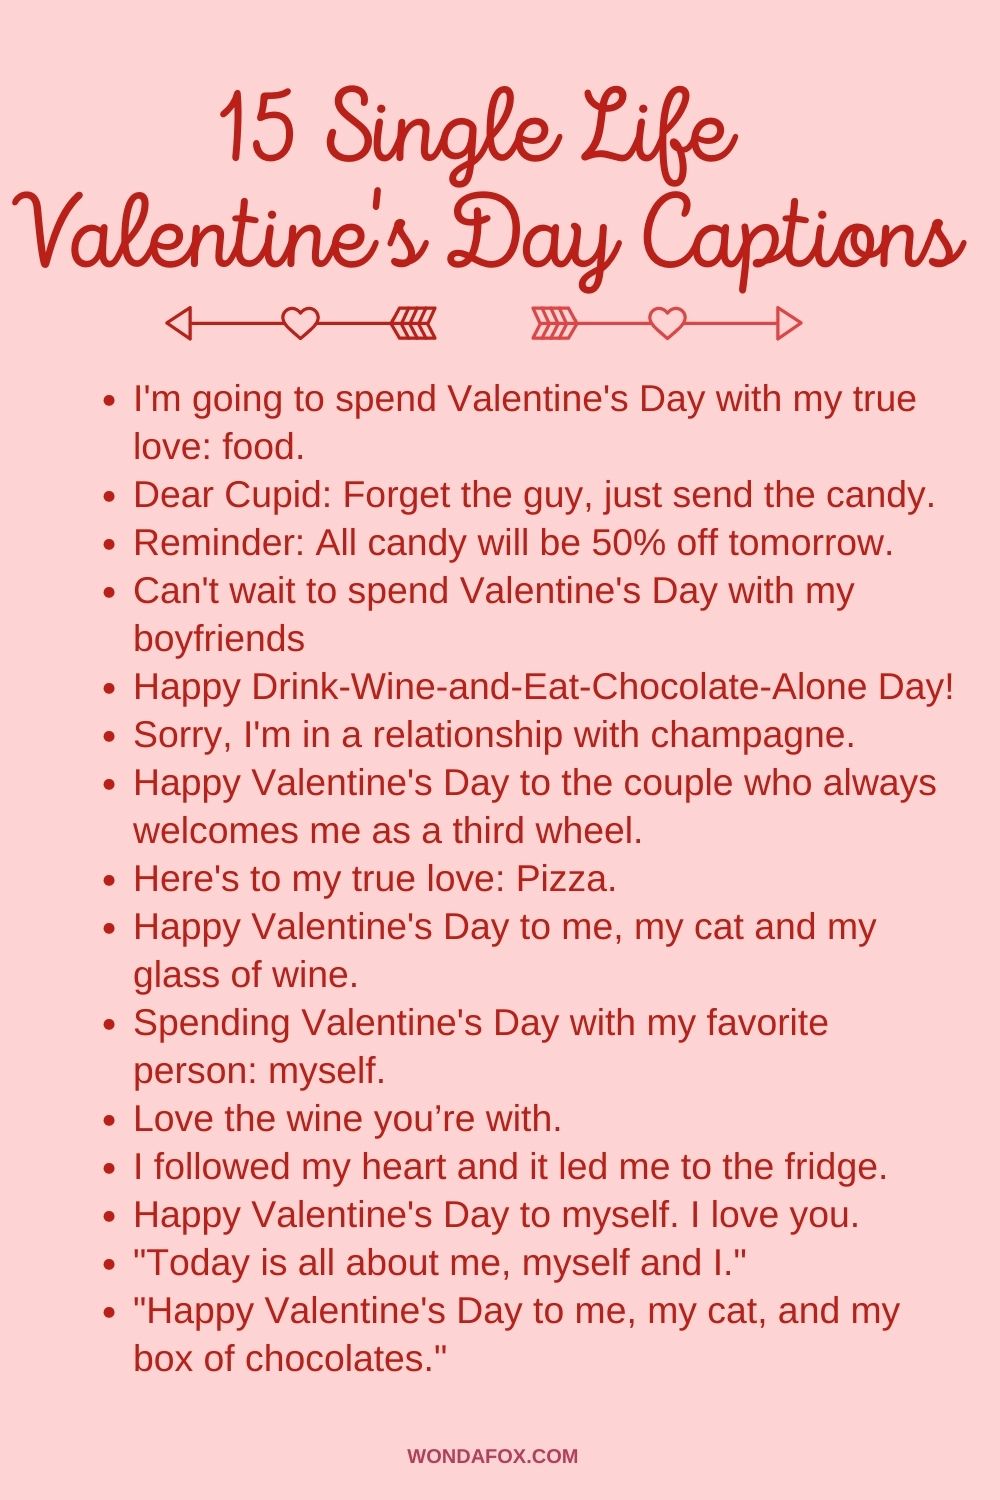 single life valentines day captions